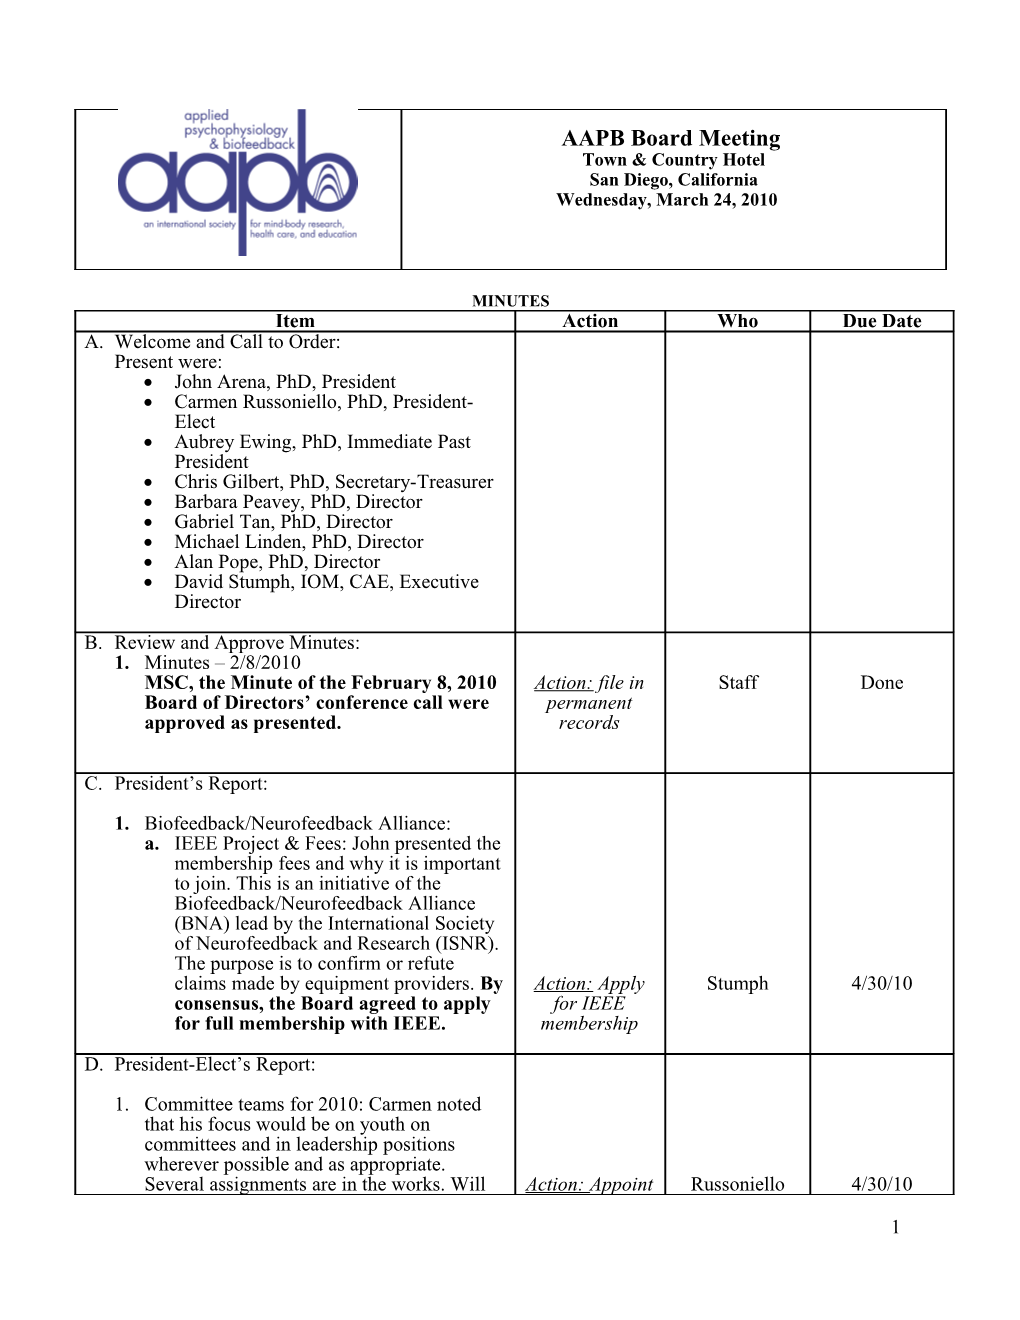 AAPB Board Meeting Agenda